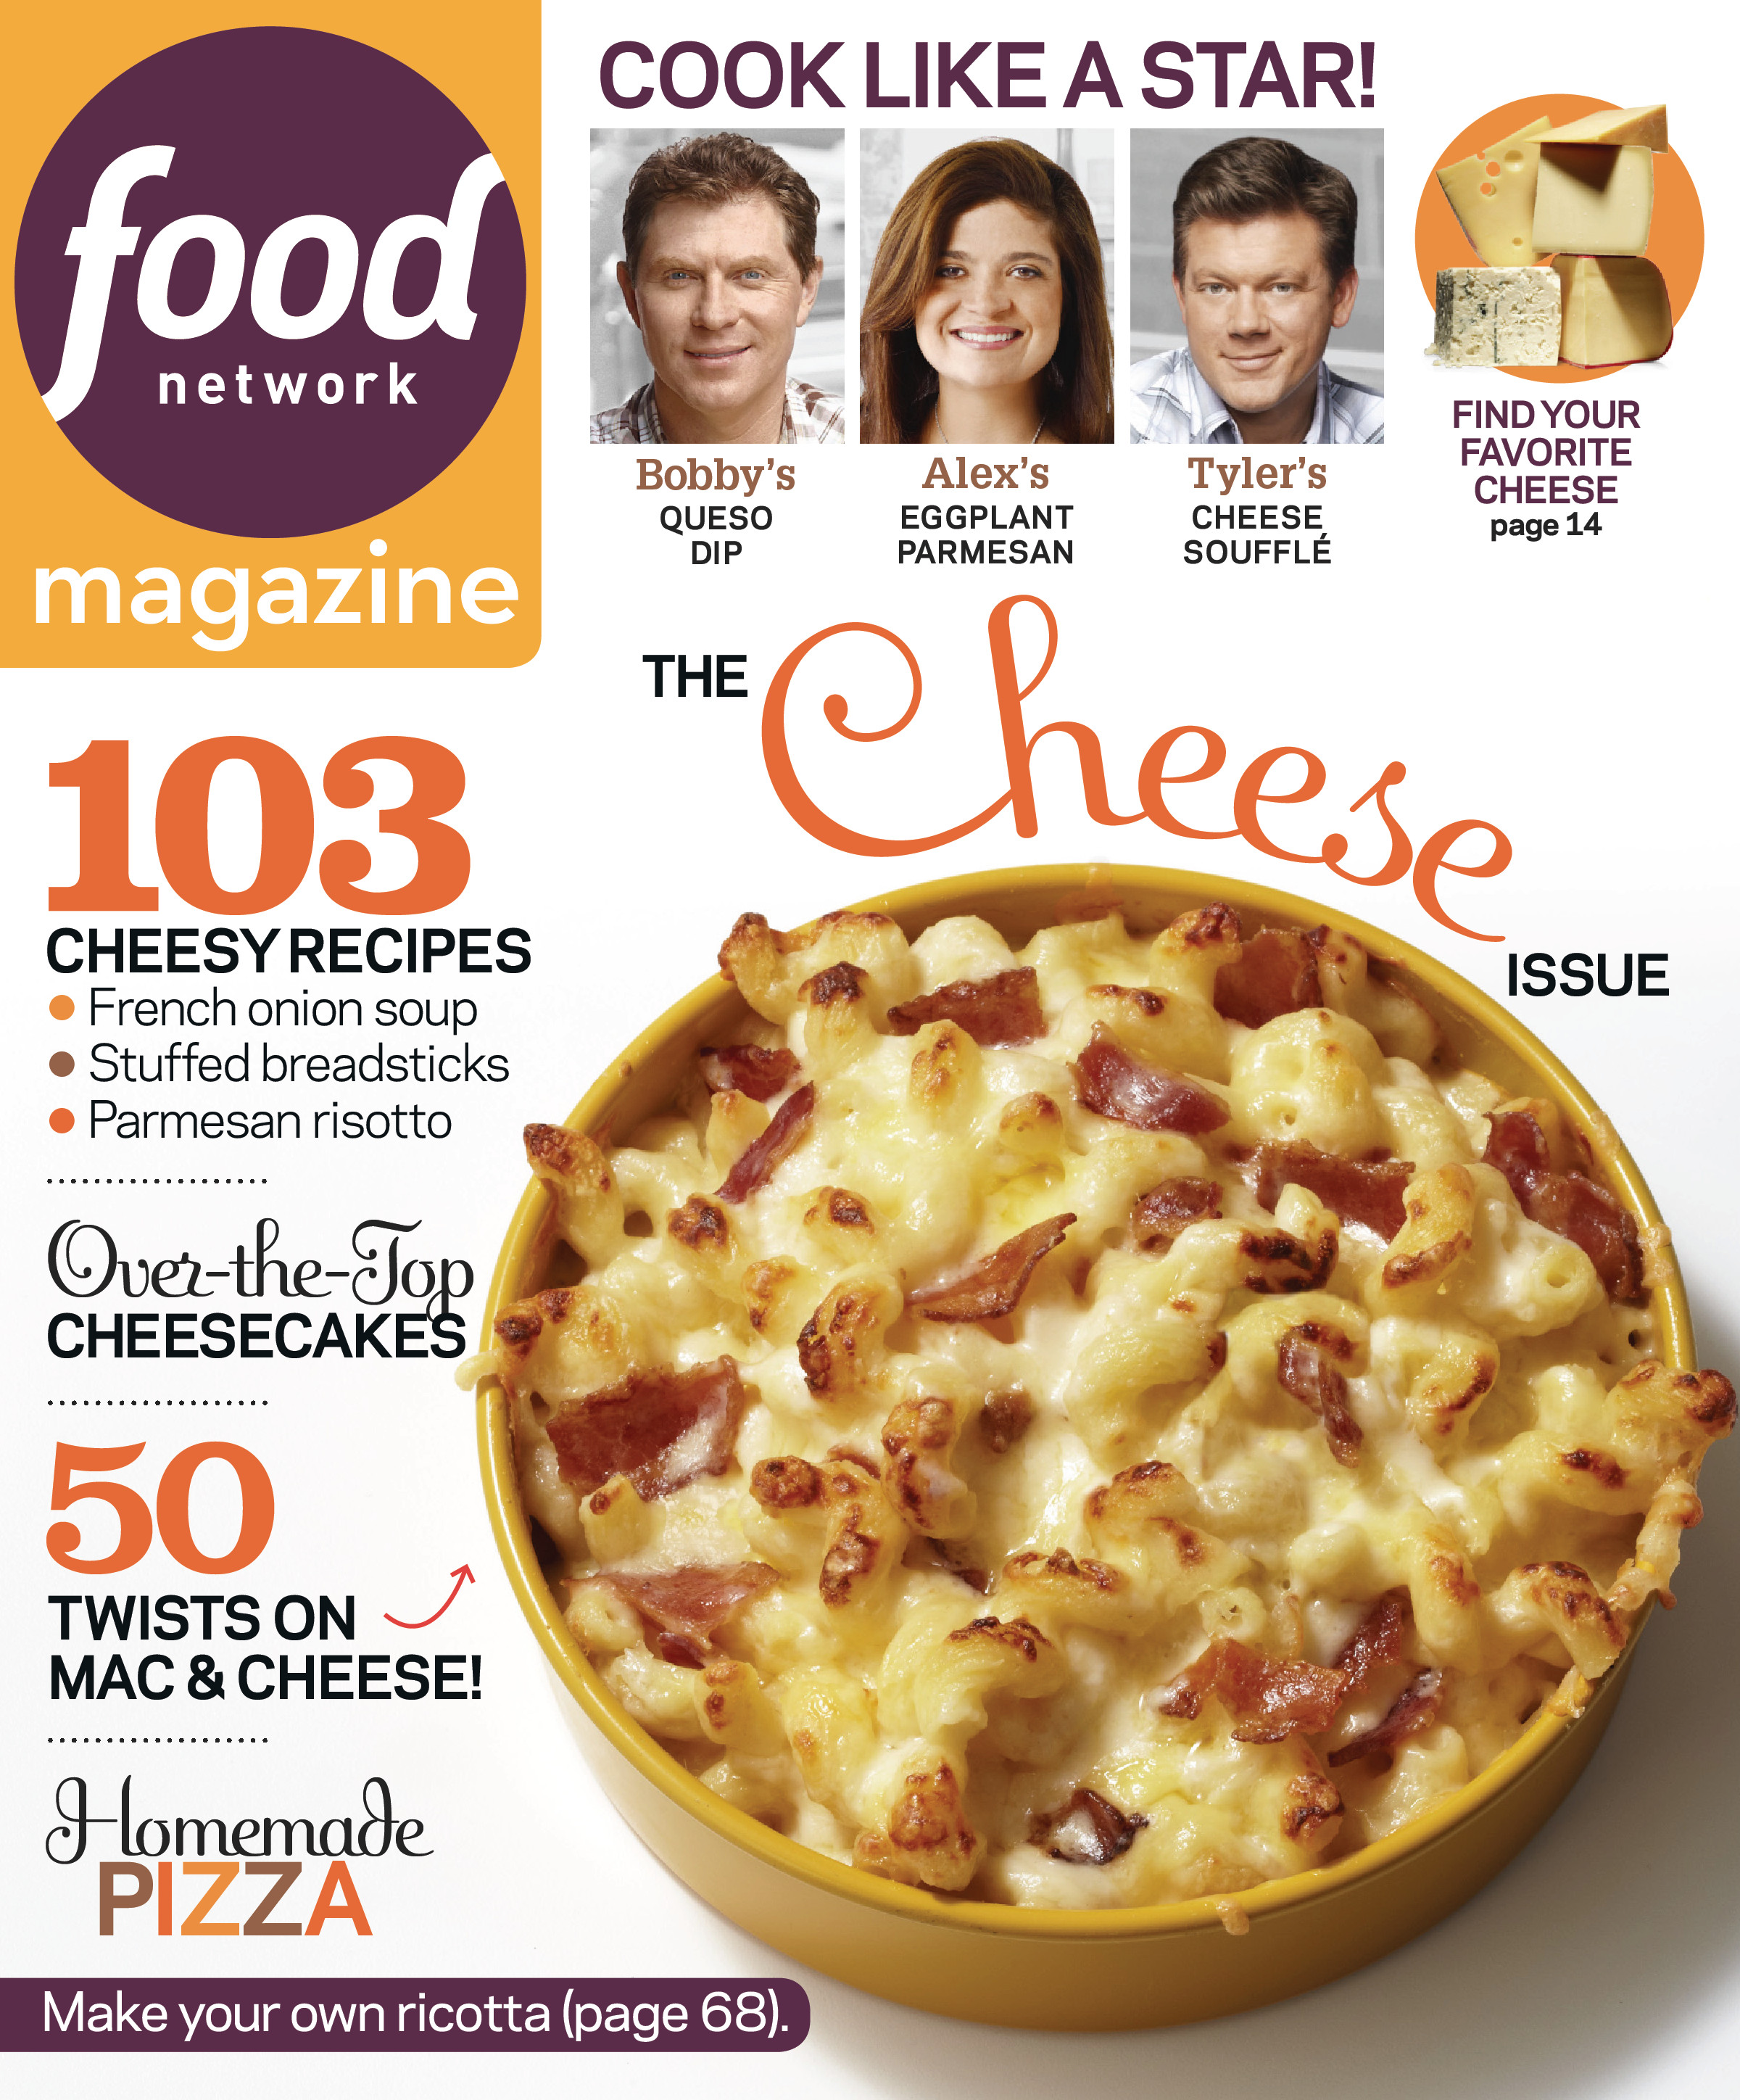 Food Network Magazine allcheese issue John Eats Cheese